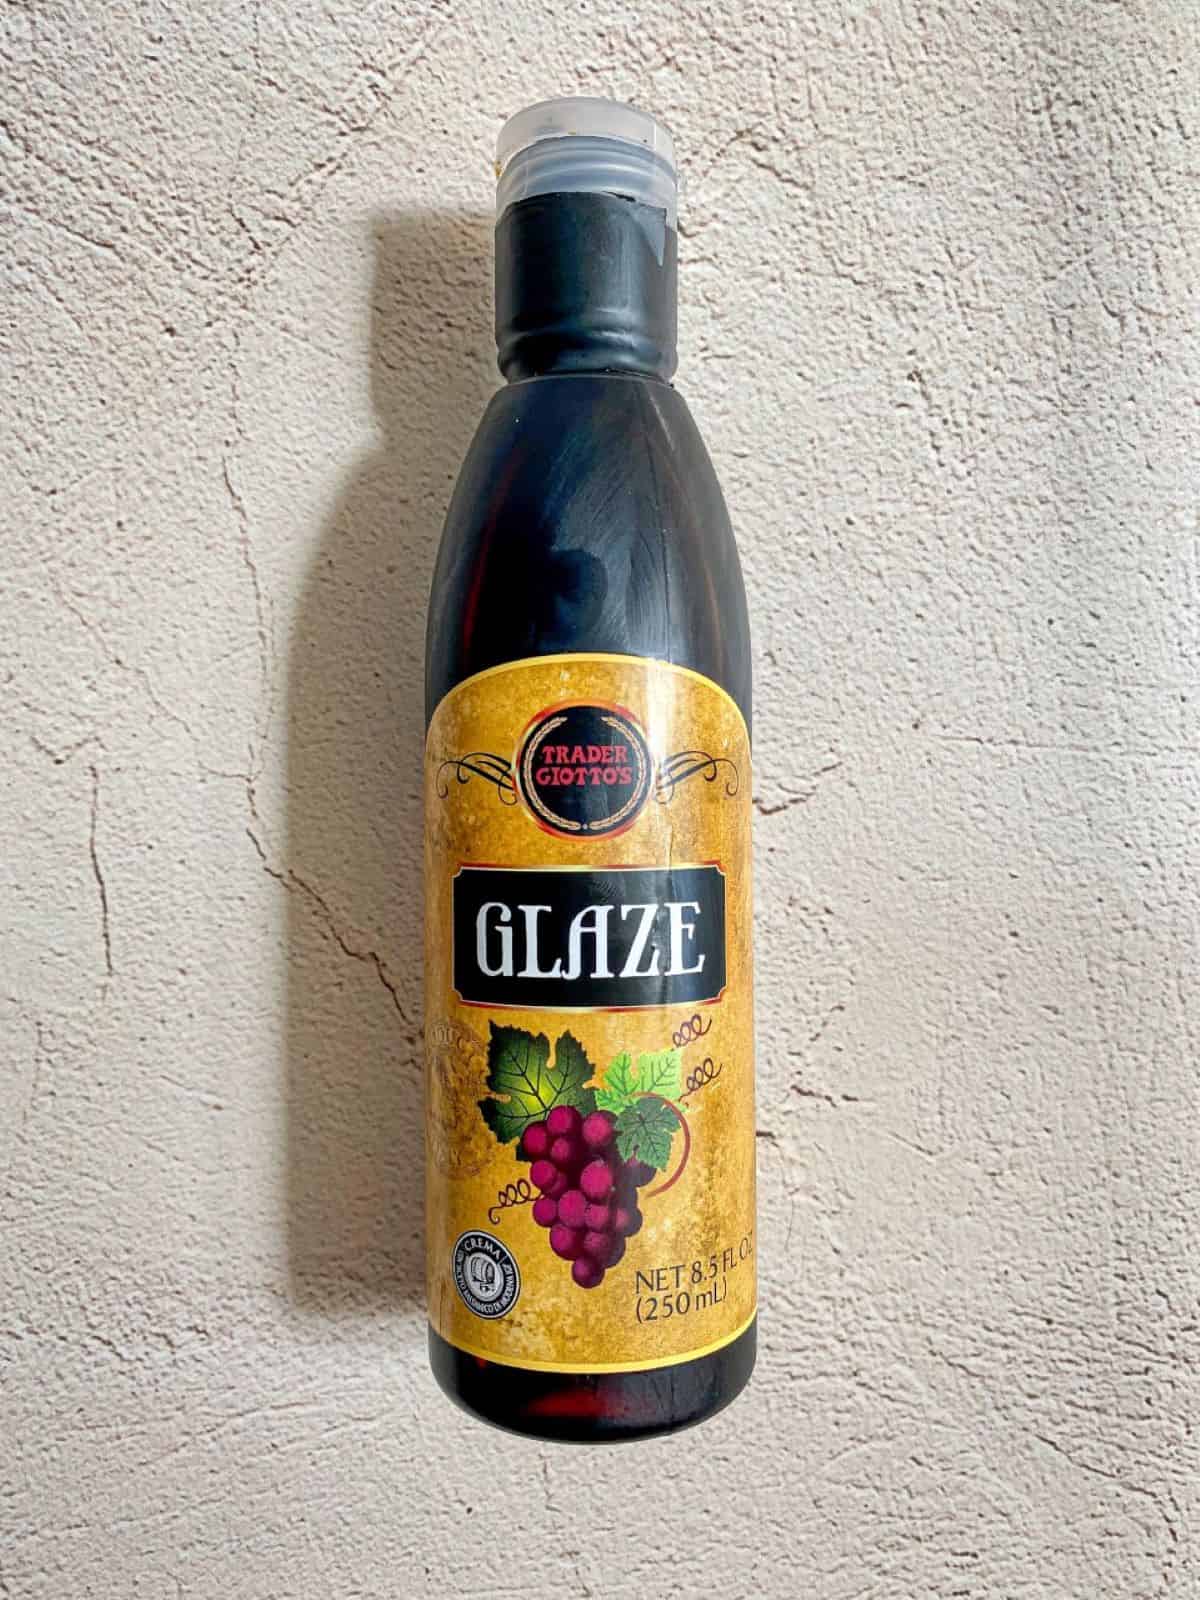 A bottle of Trader Joe's balsamic glaze.